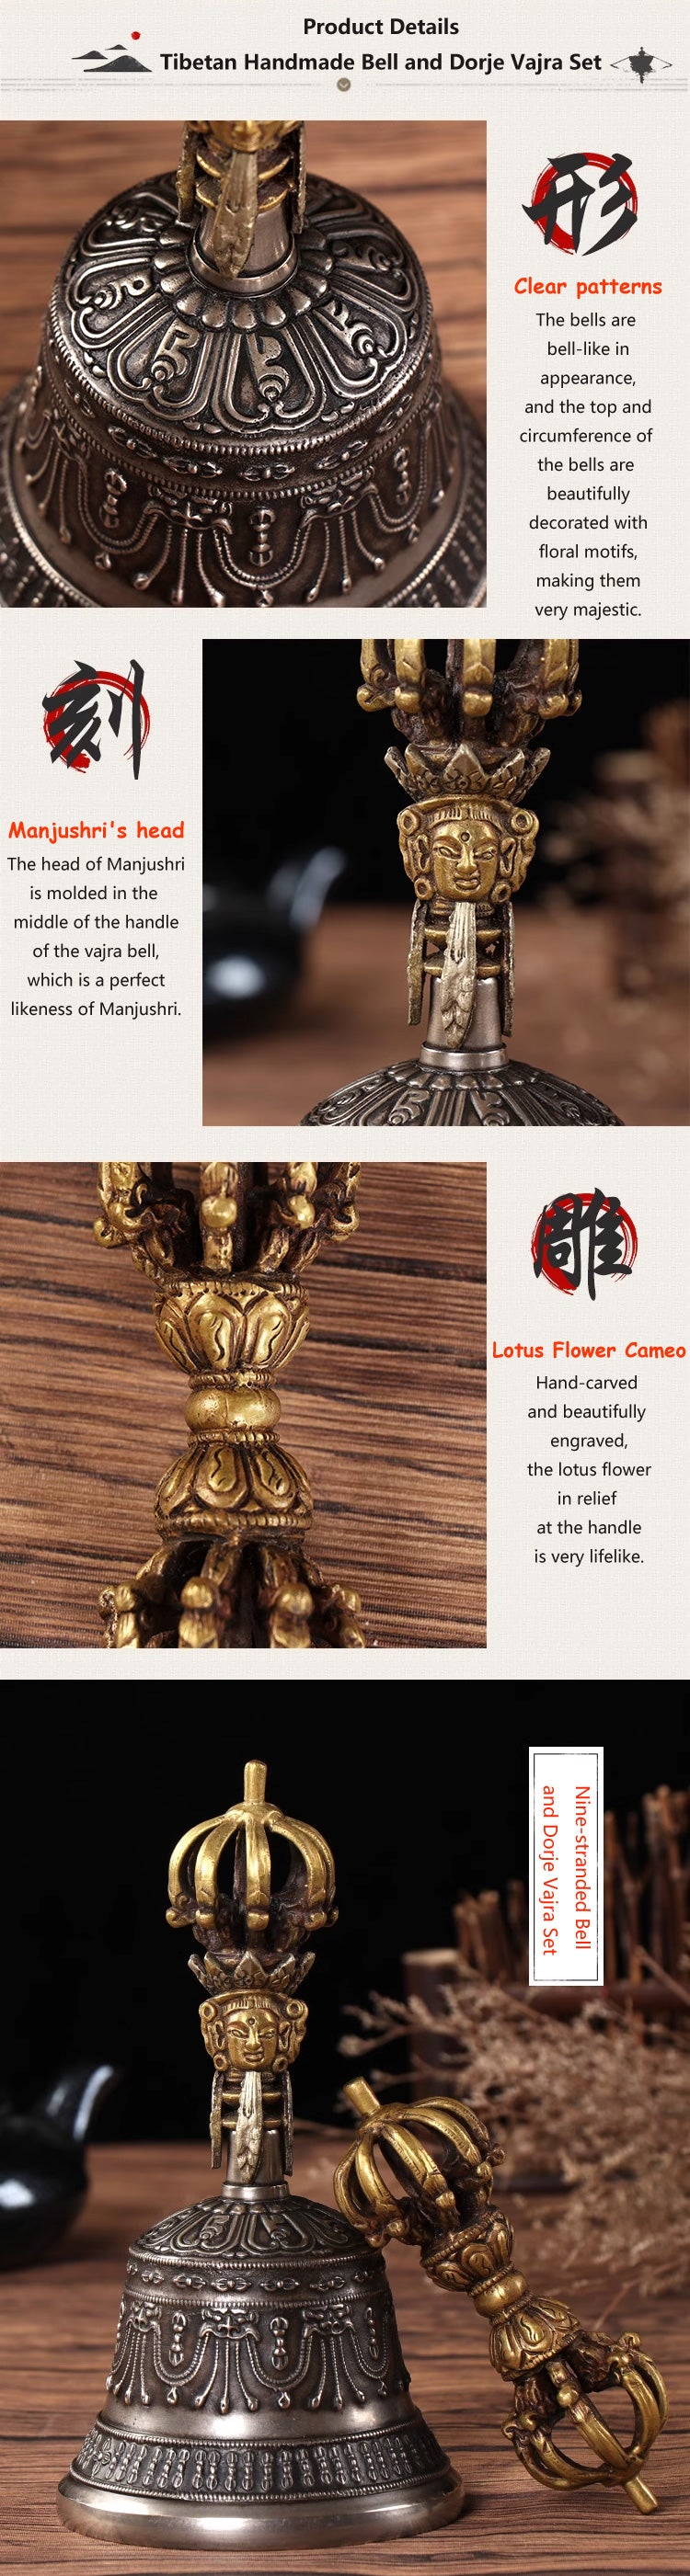 Tibetan Hand Bell and Dorje Vajra Set for Sale, Handmade in Bronze with Nine Strands of Carvings detail 3